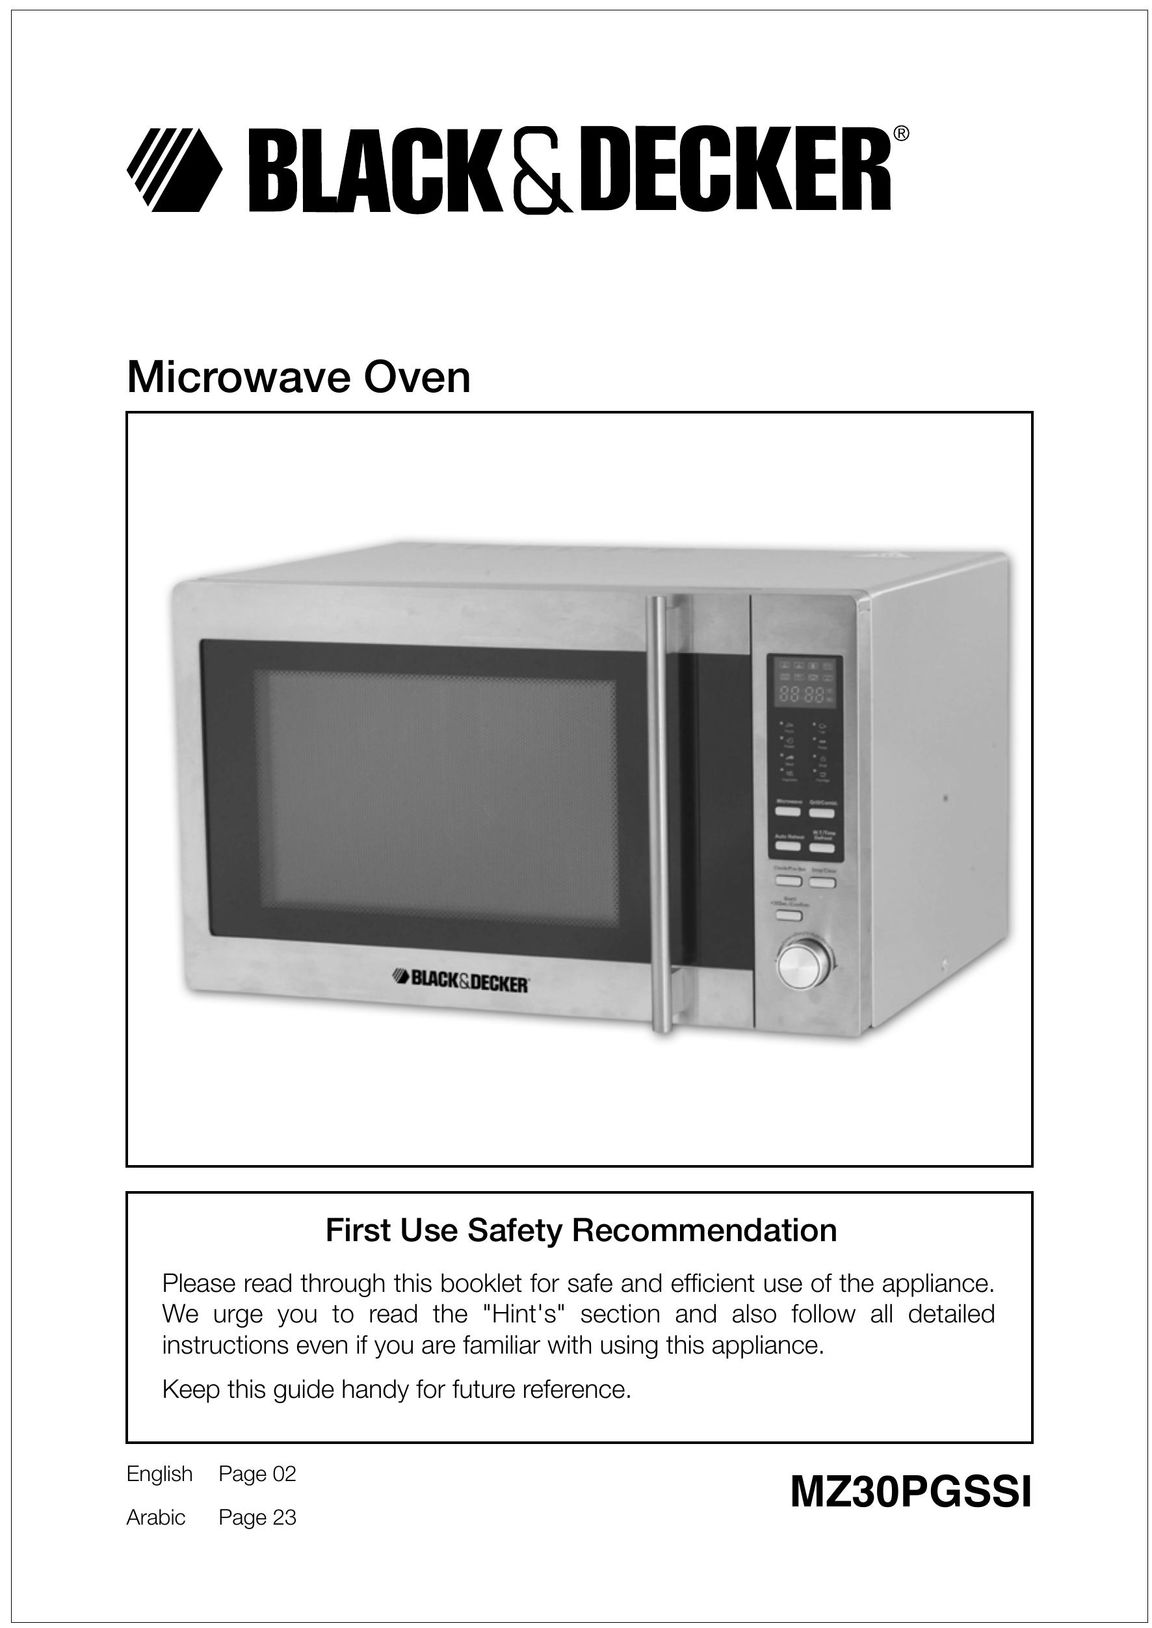 Black & Decker MZ30PGSSI Microwave Oven User Manual